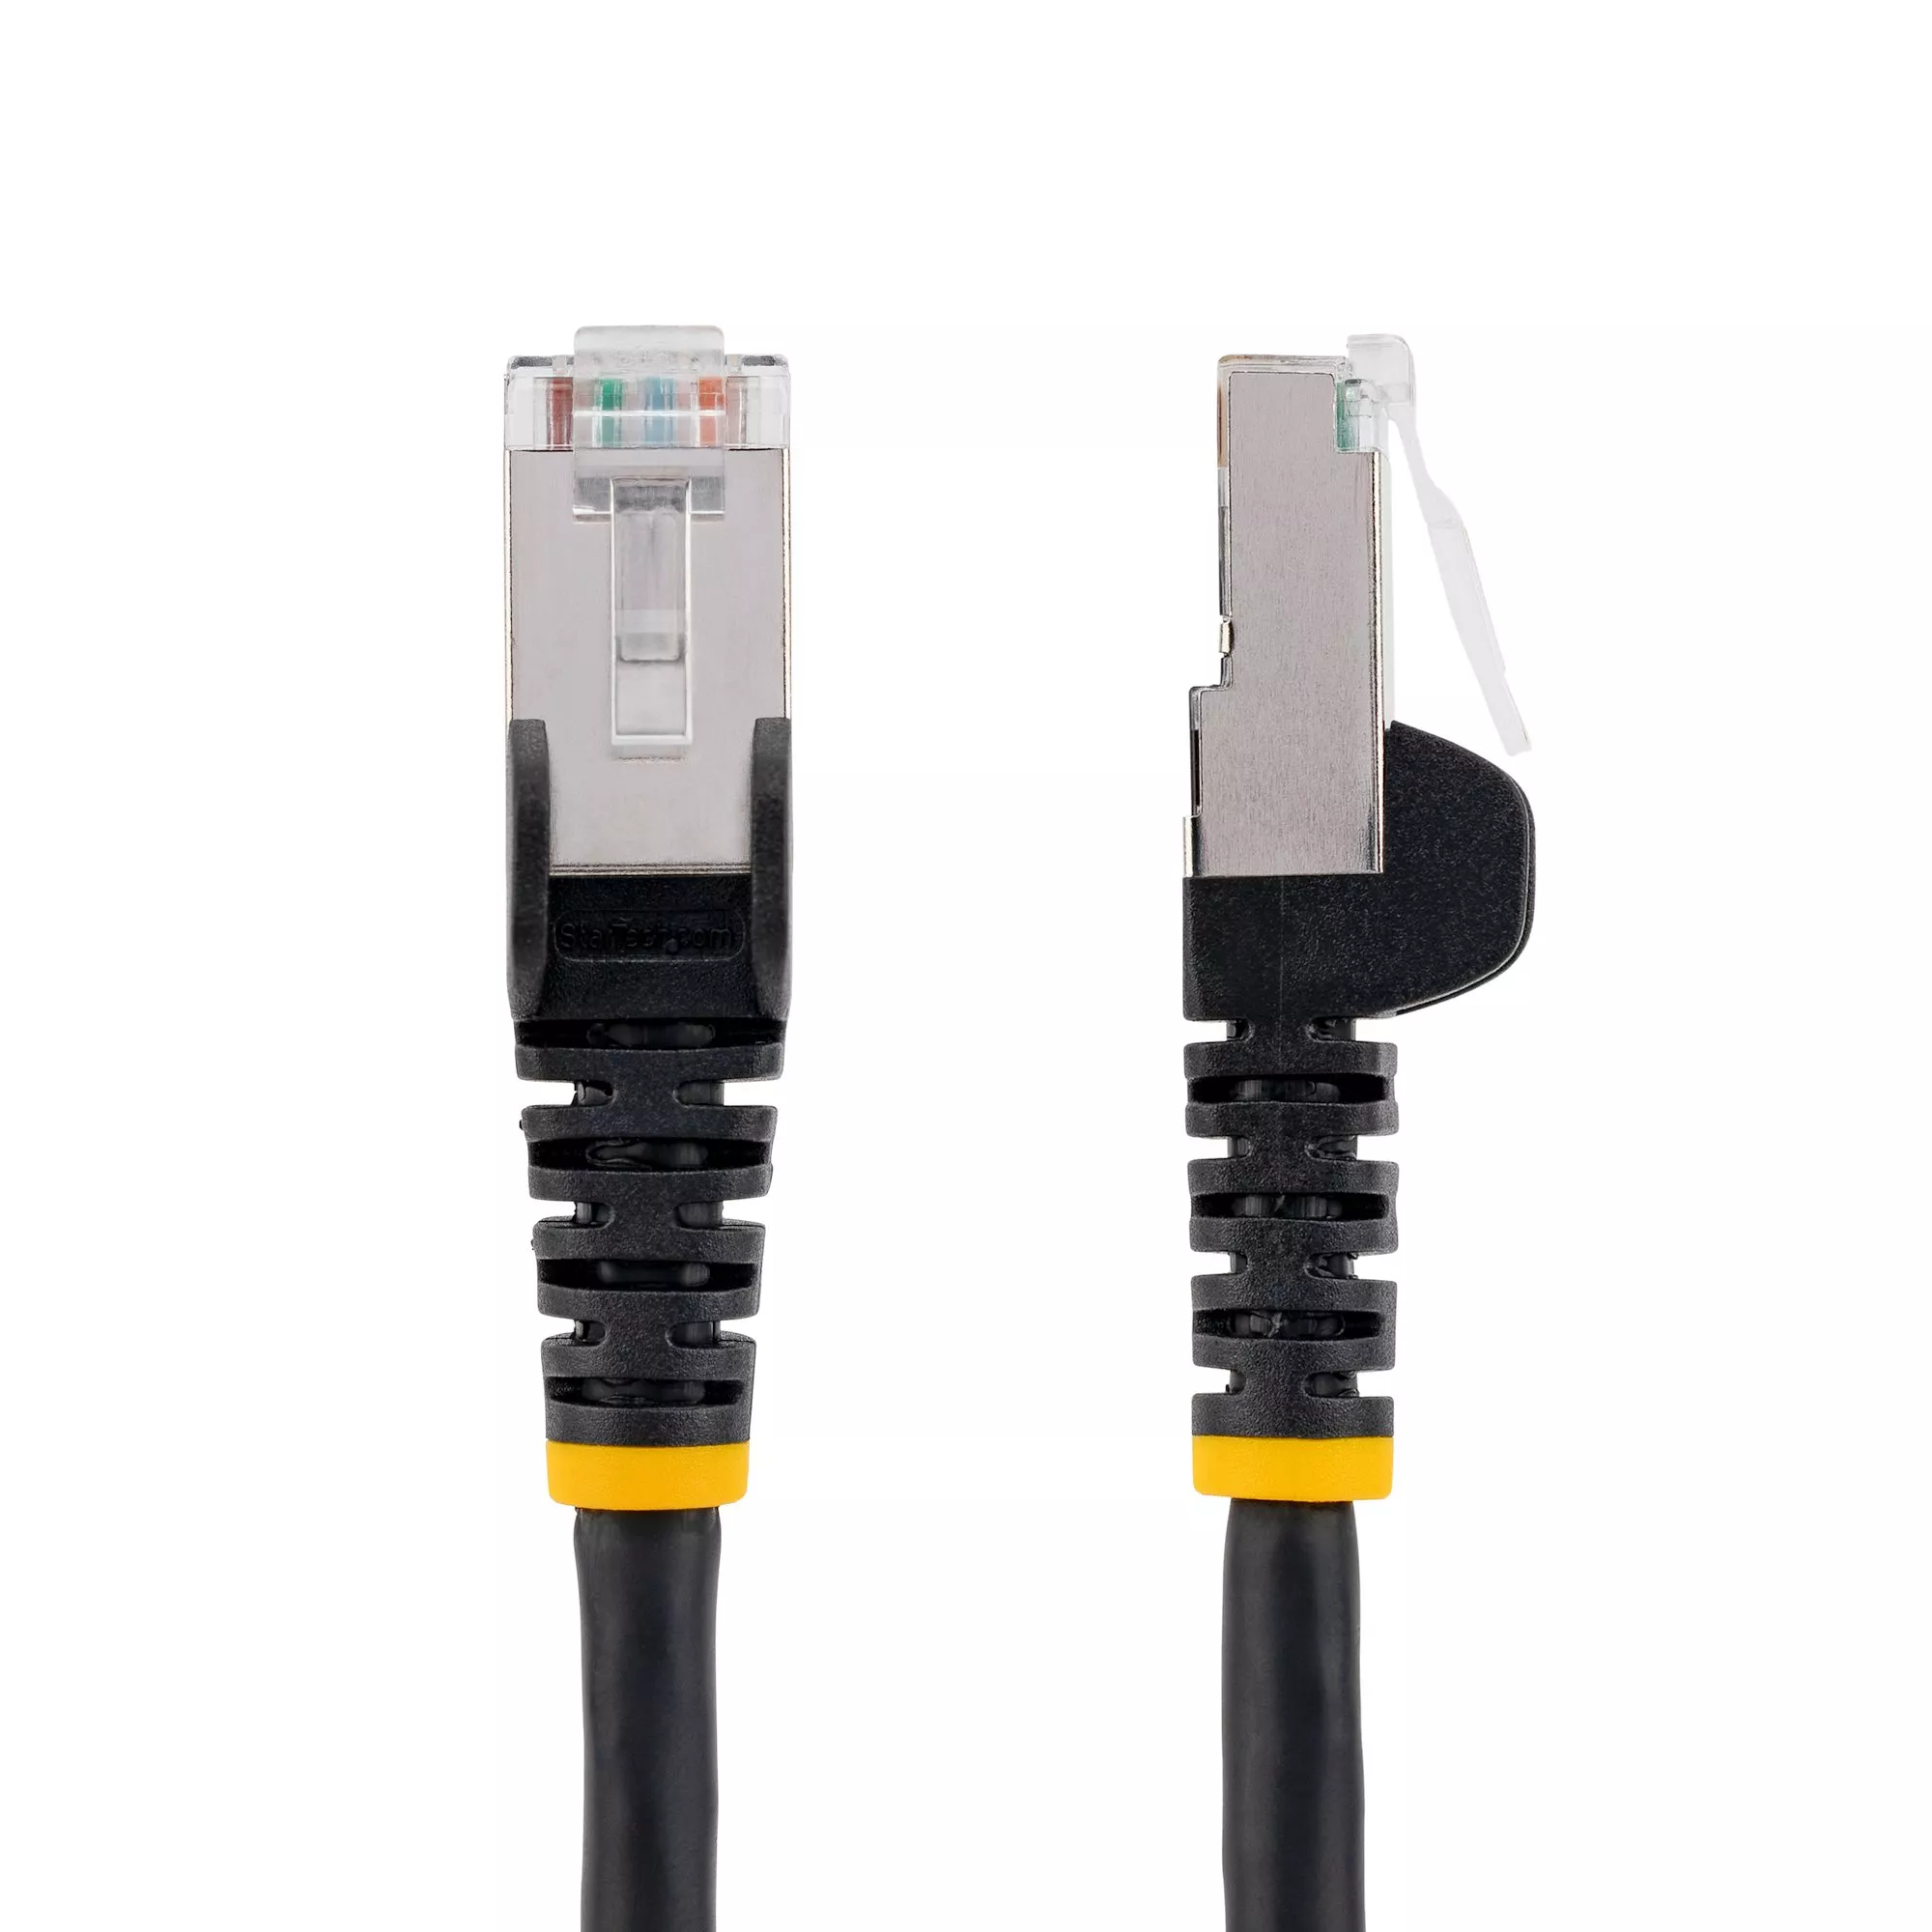 Vente StarTech.com Câble Ethernet CAT6a 50cm - Low Smoke StarTech.com au meilleur prix - visuel 2